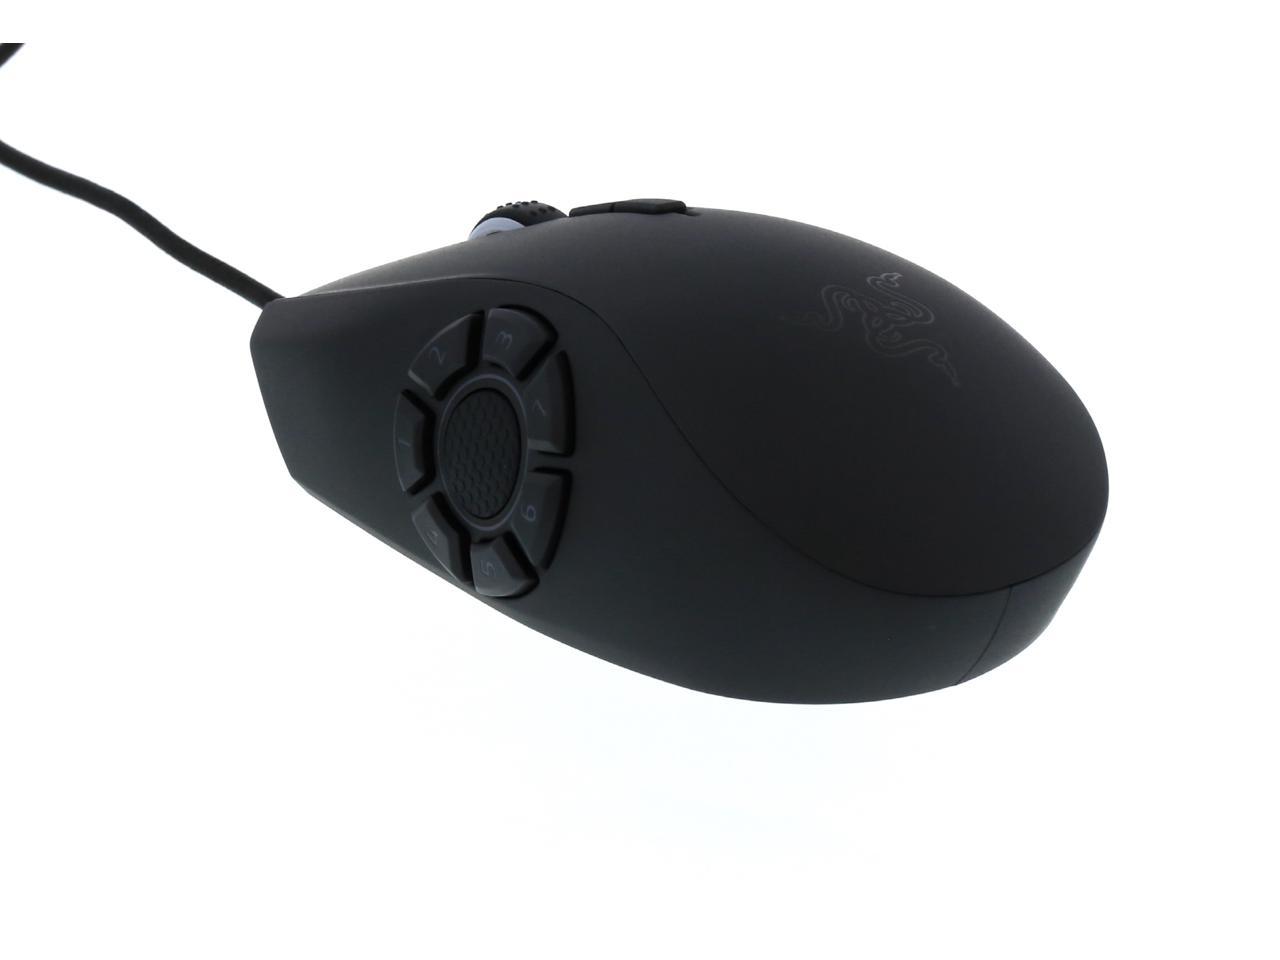 Open Box: Razer Naga Hex V2 - Multi-color MOBA Gaming Mouse